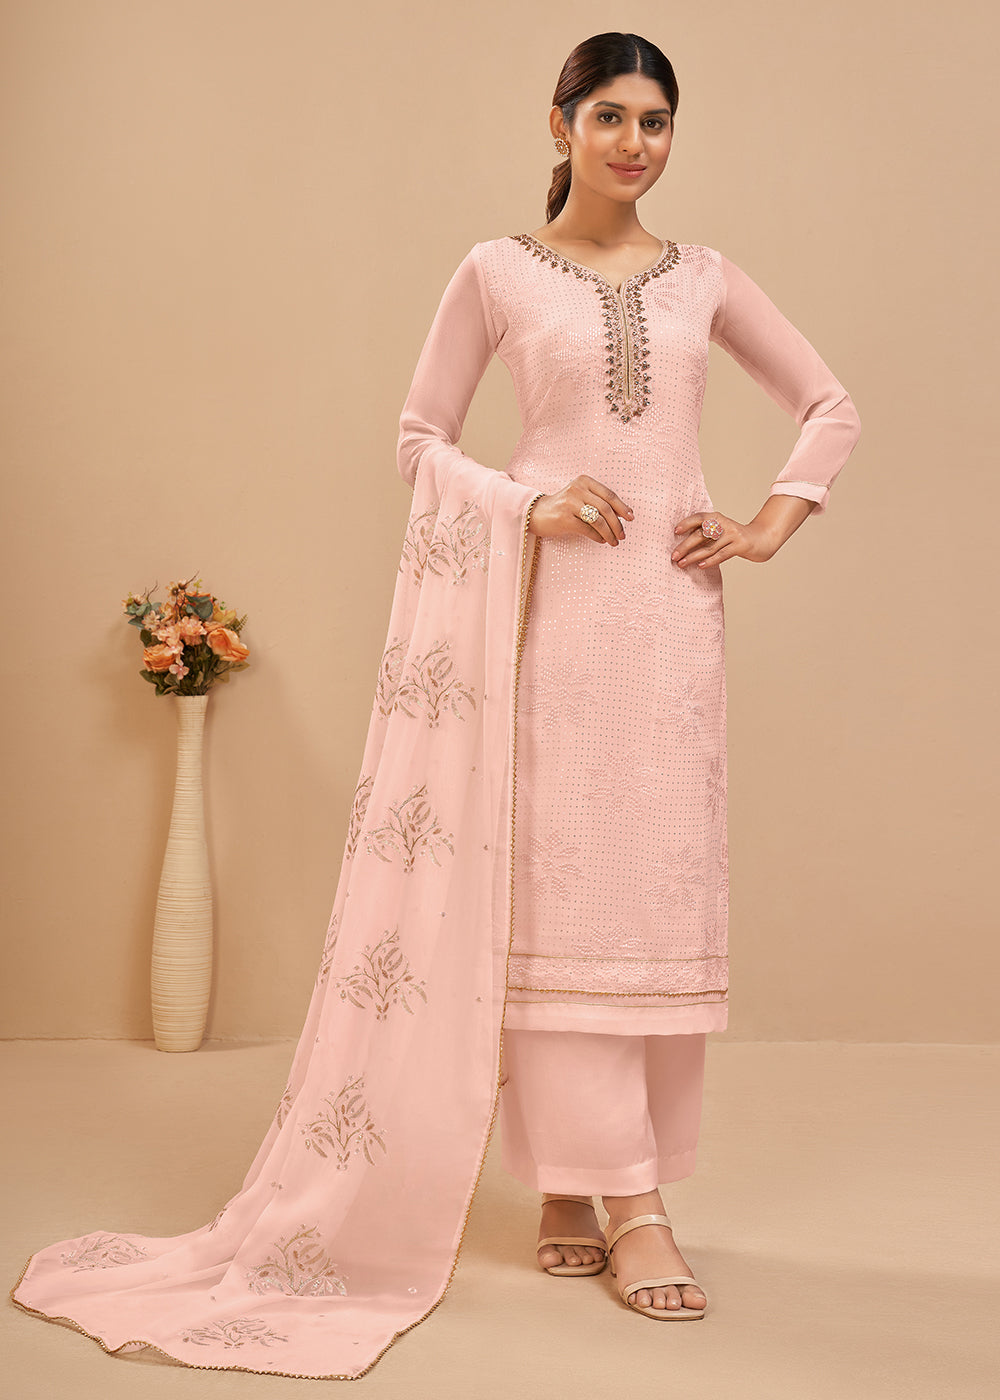 Buy Now Stunning Peach Sequins & Khatli Work Festive Palazzo Salwar Suit Online in USA, UK, Canada, Germany, Australia & Worldwide at Empress Clothing.